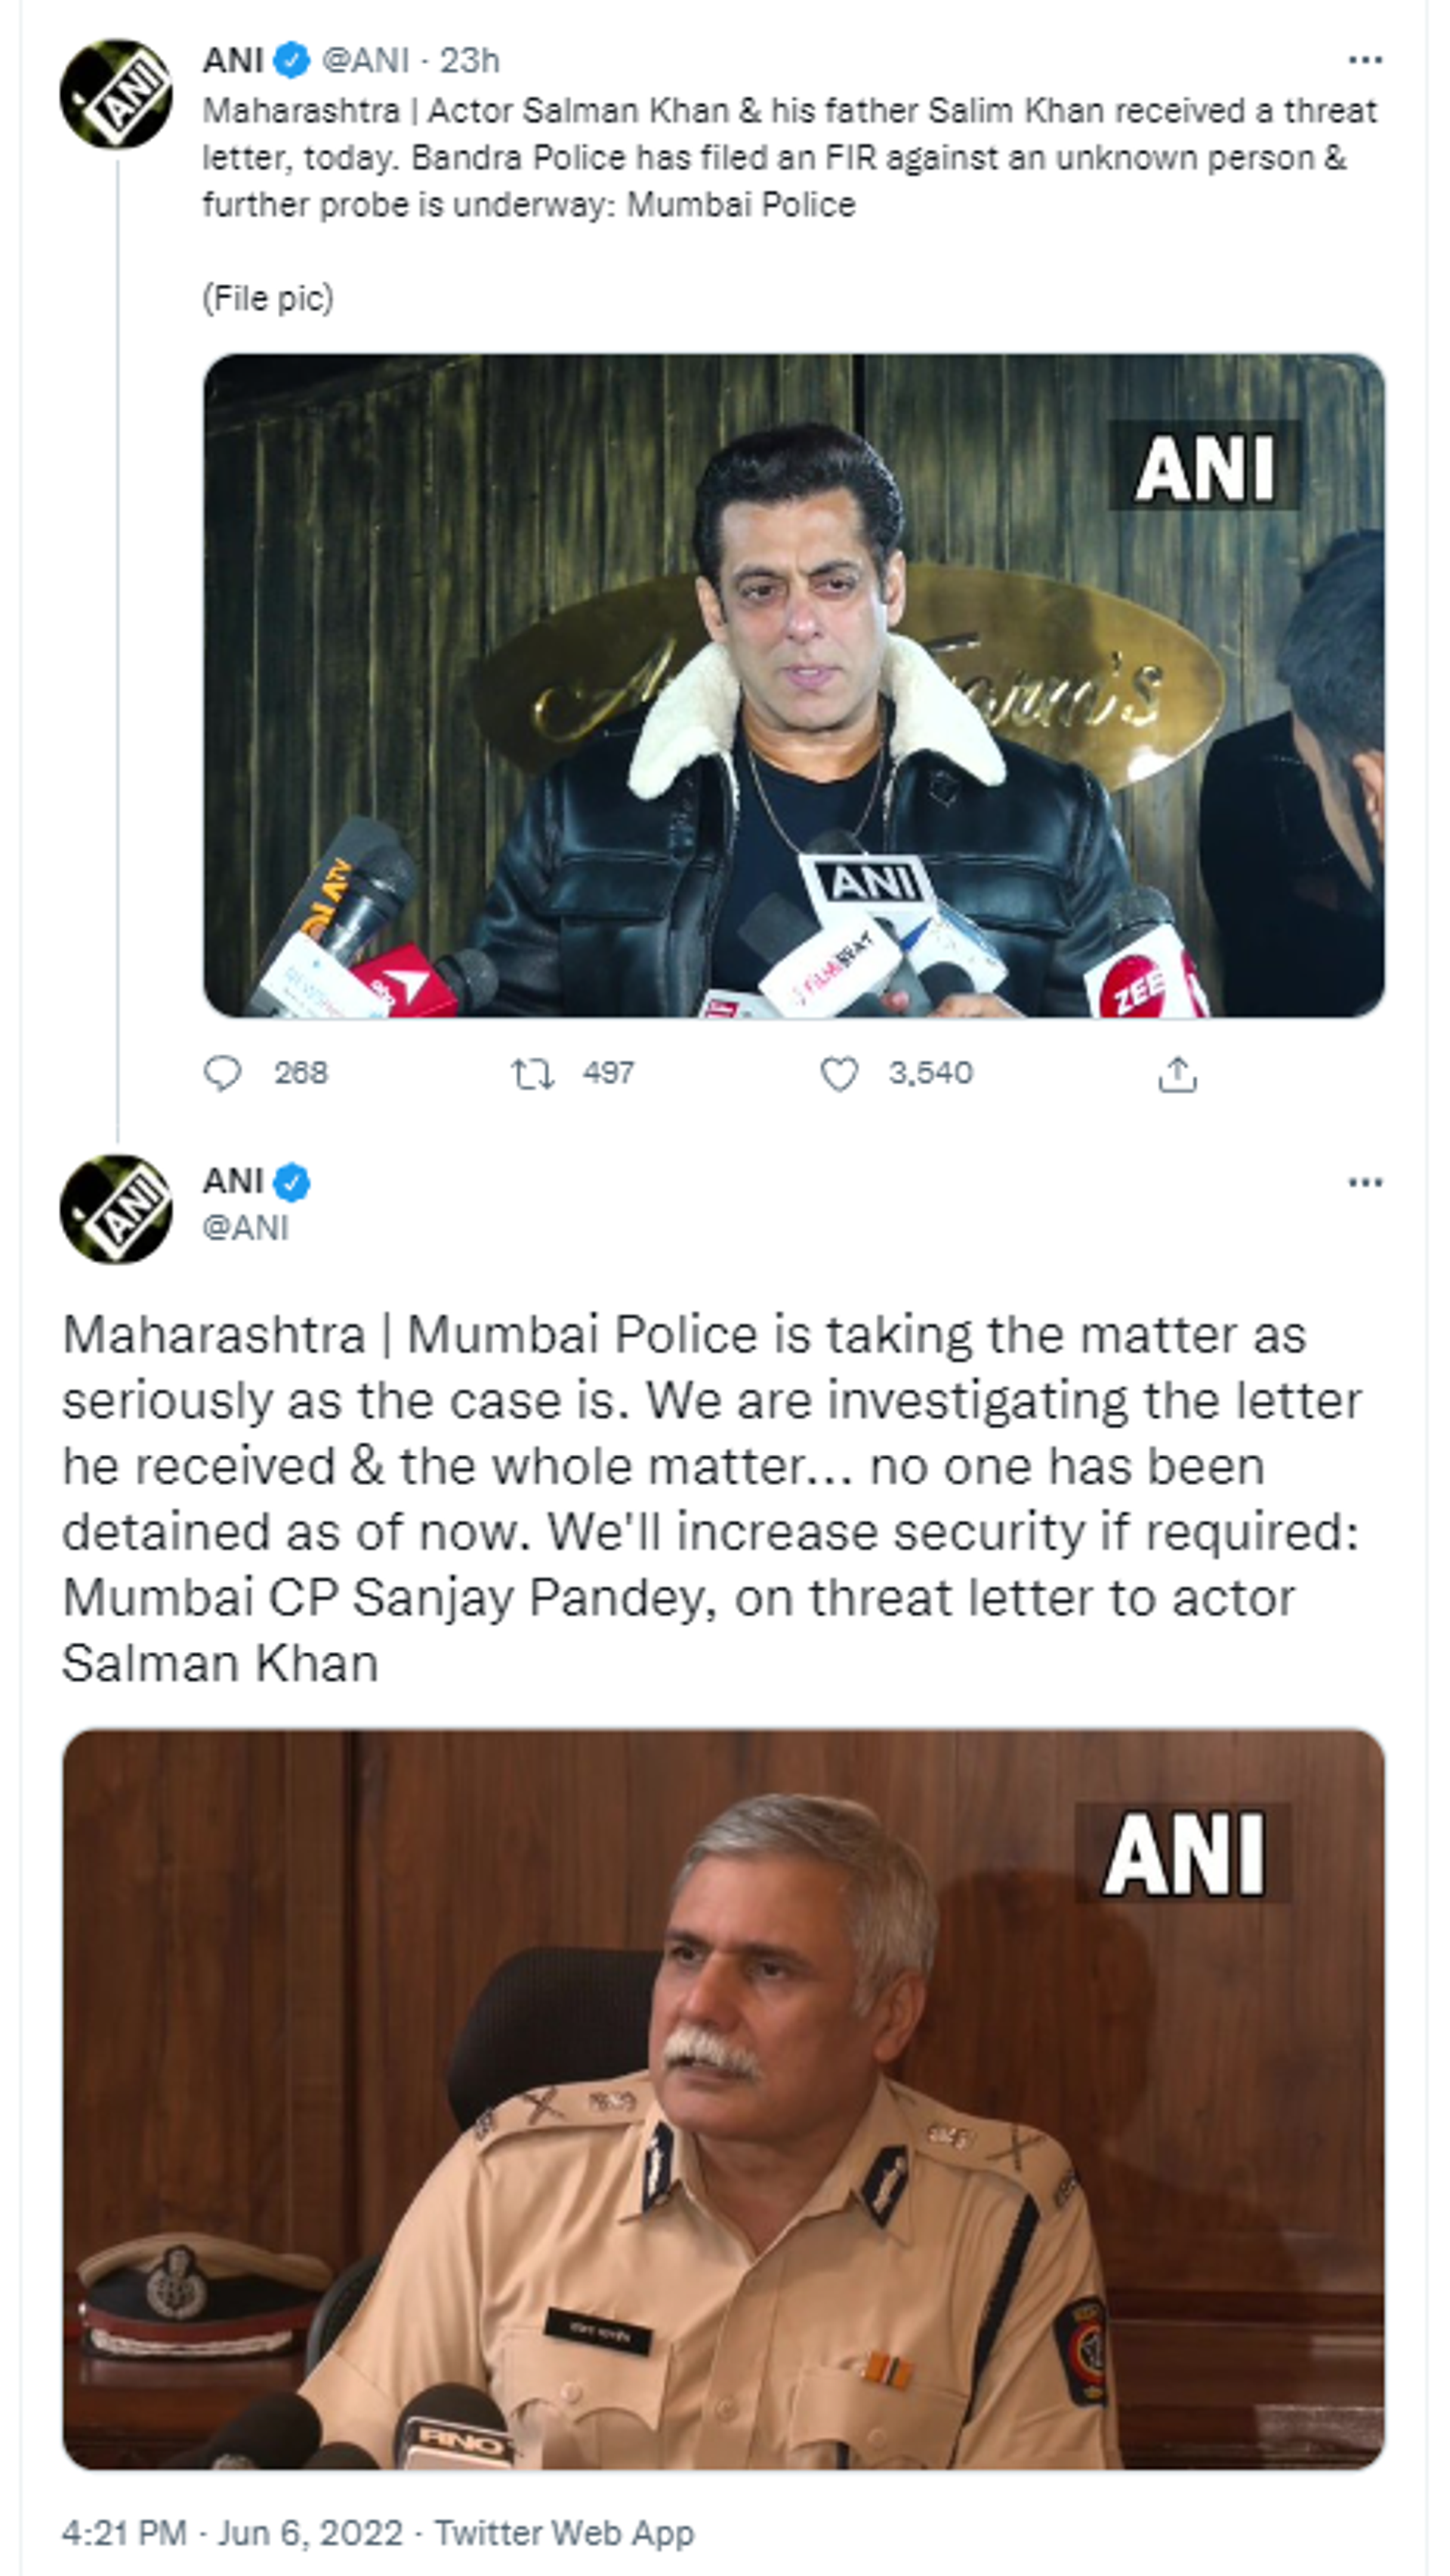 'Same Fate as Moosewala': After Threat Letter, Police Beef Up Security of Bollywood Star Salman Khan - Sputnik International, 1920, 06.06.2022